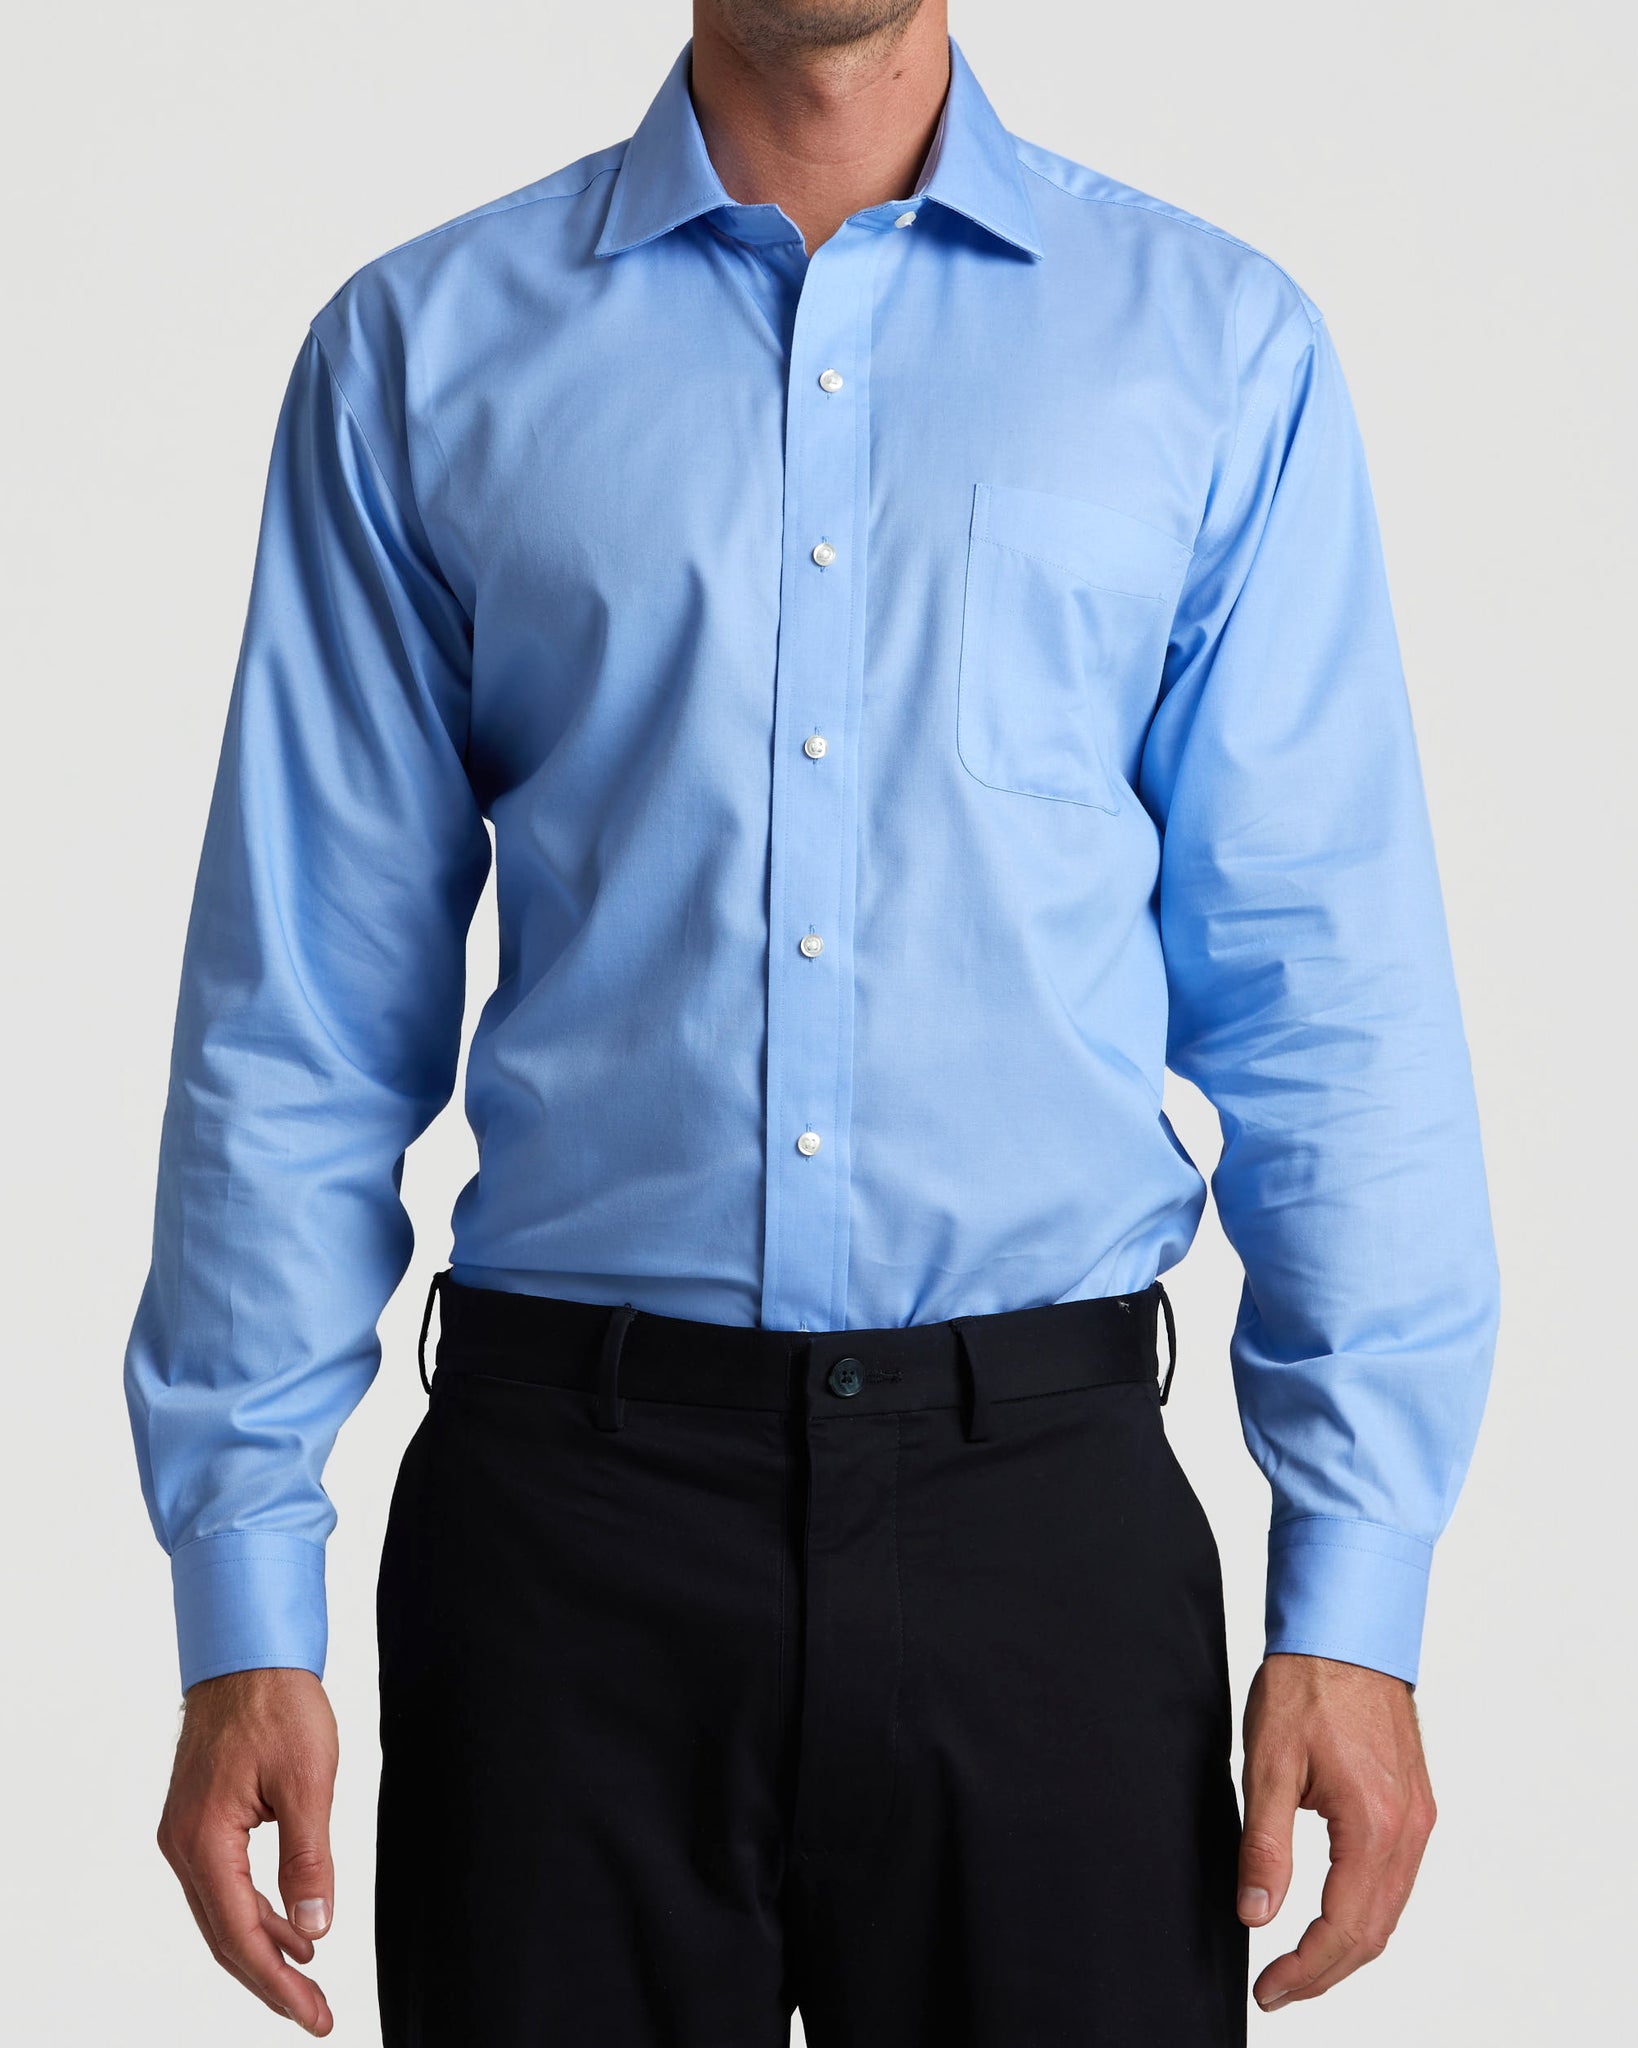 MagnaClick Regular Fit Dress Shirt (Mens) - Blue